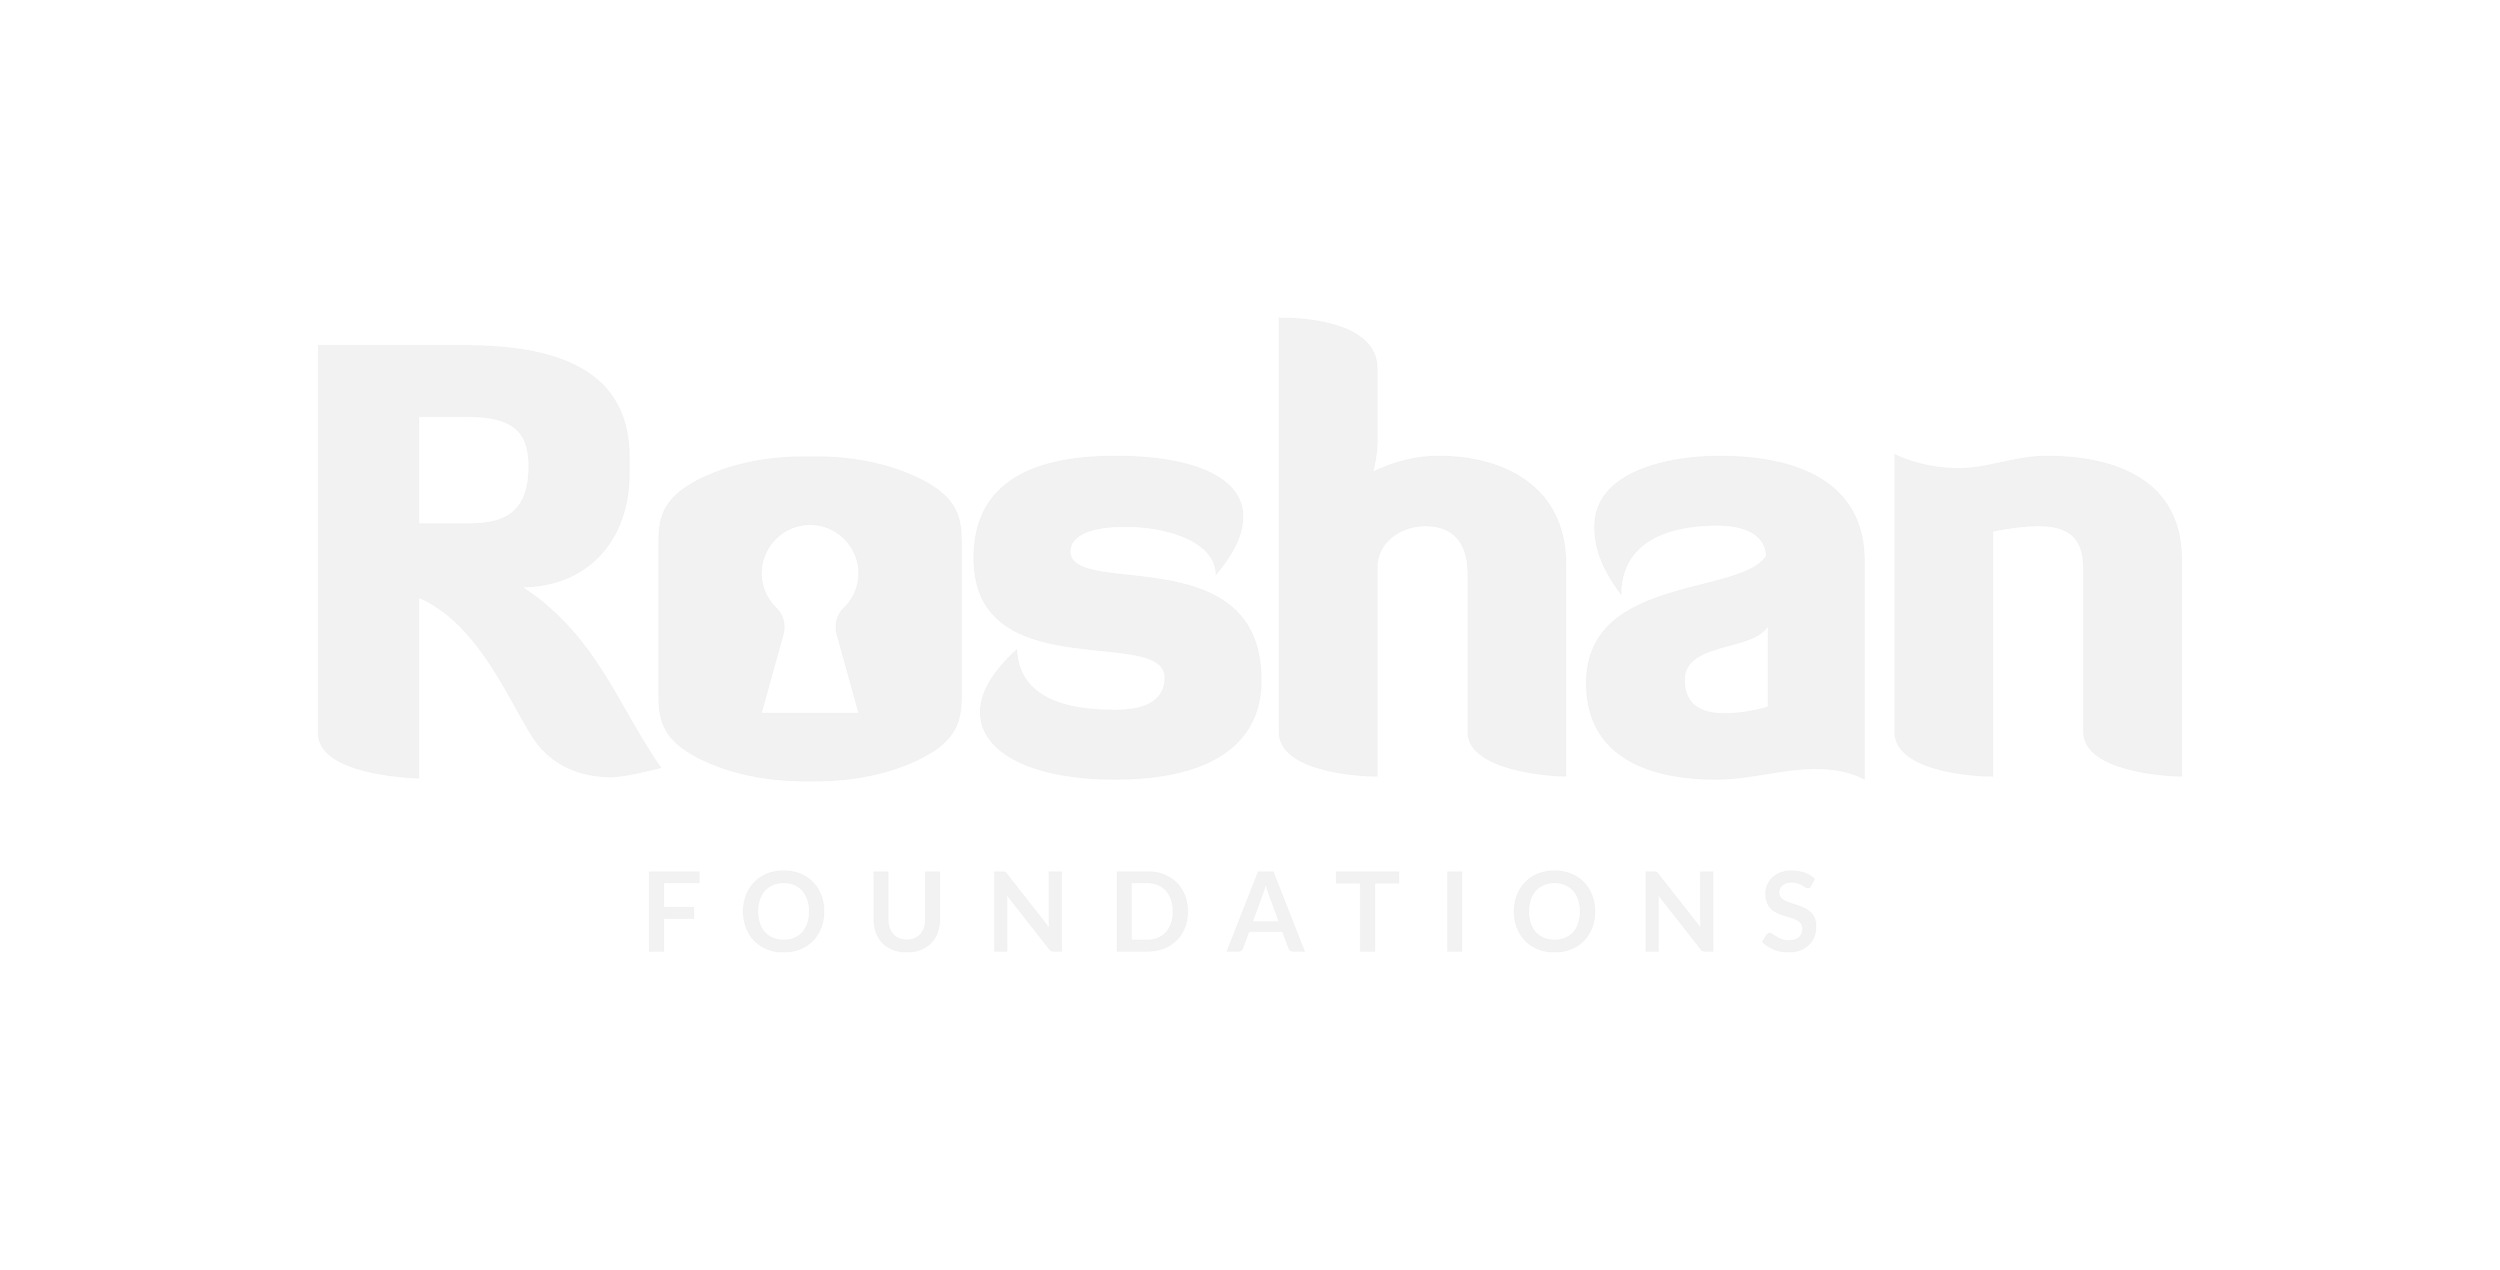 Roshan – Logos Download